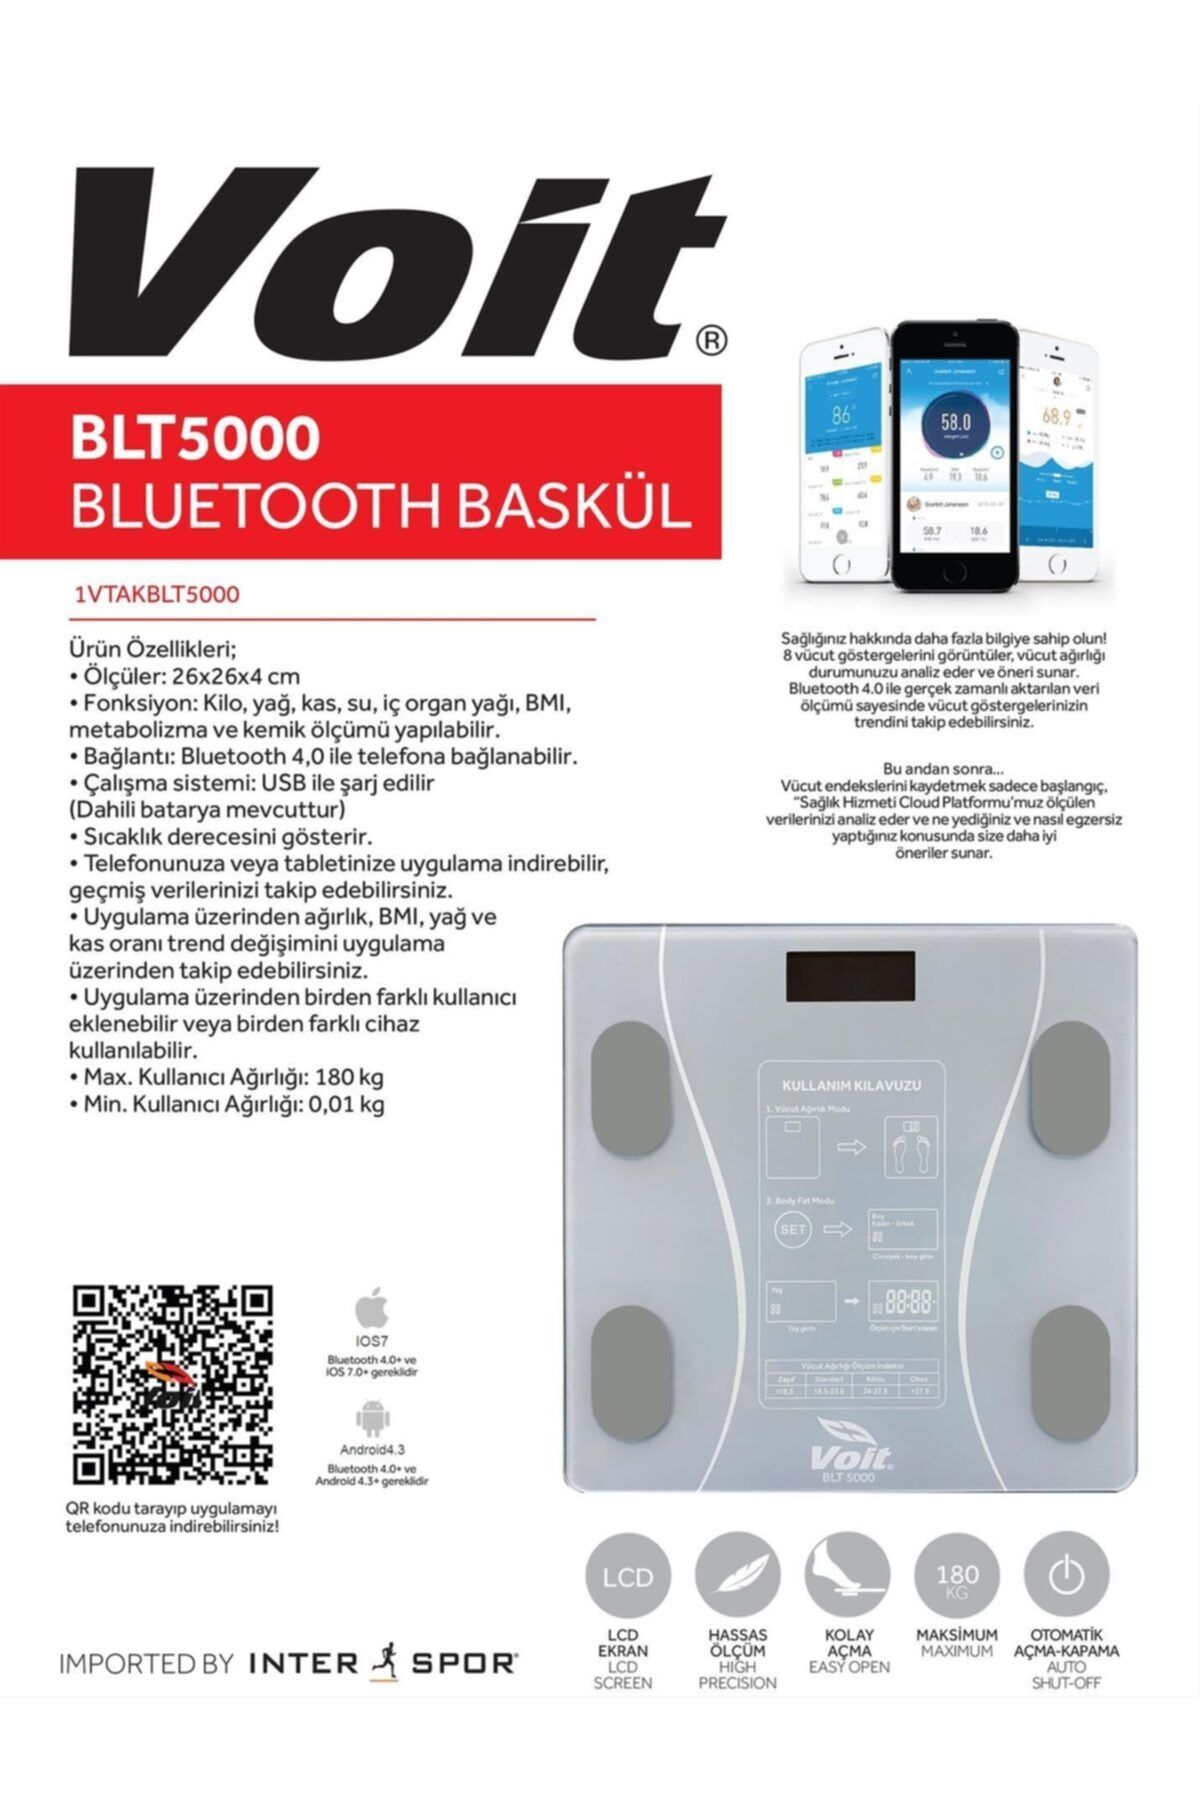 Voit Bluetoothluakıllı Baskül